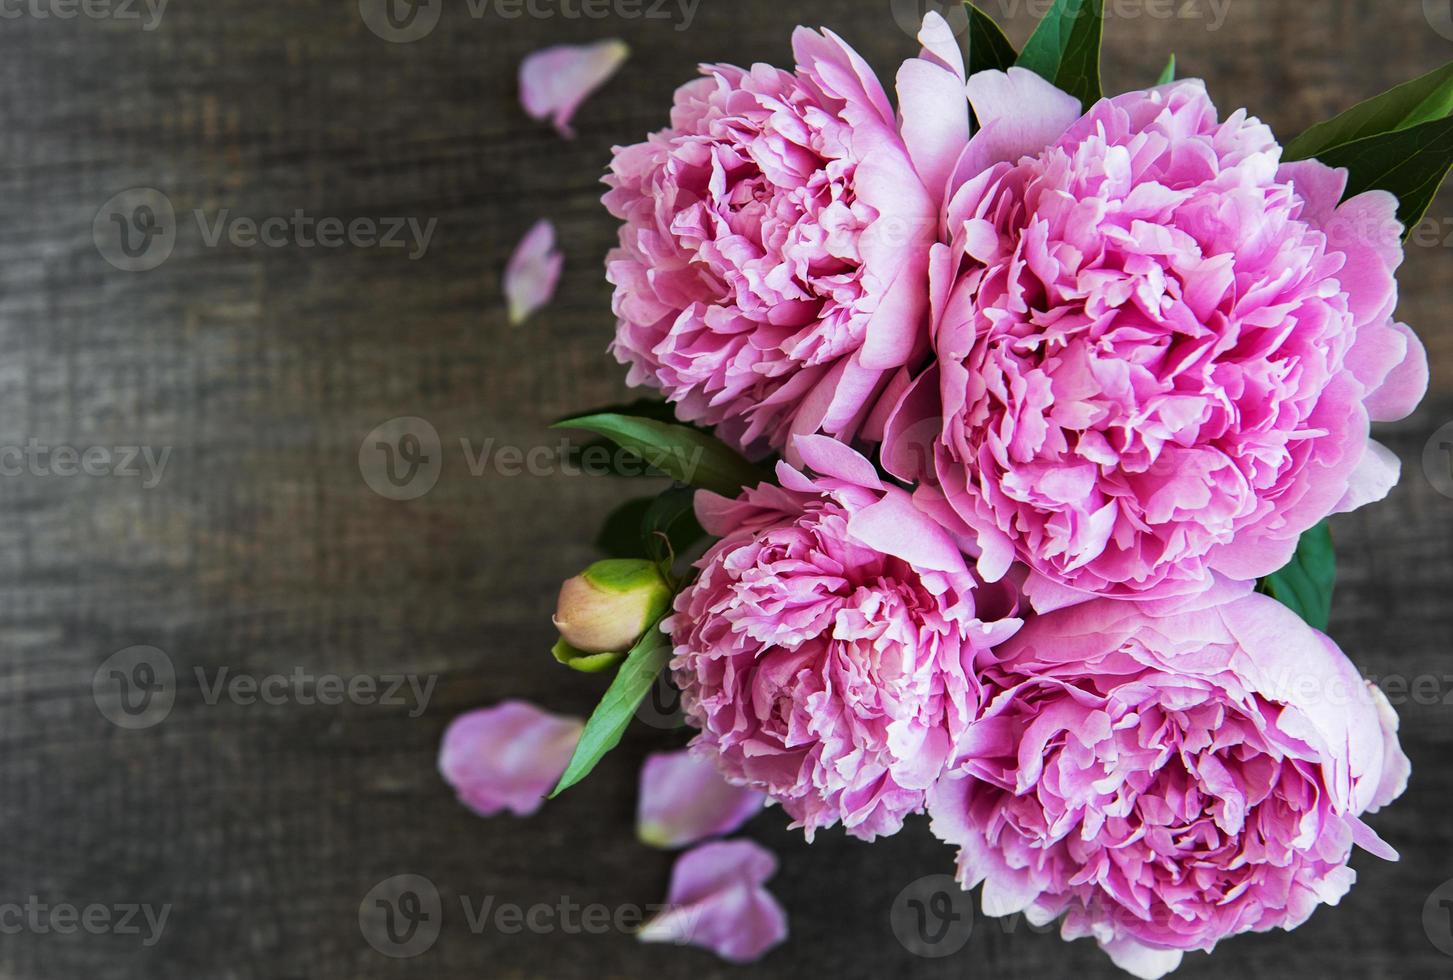 flores de peônia rosa foto